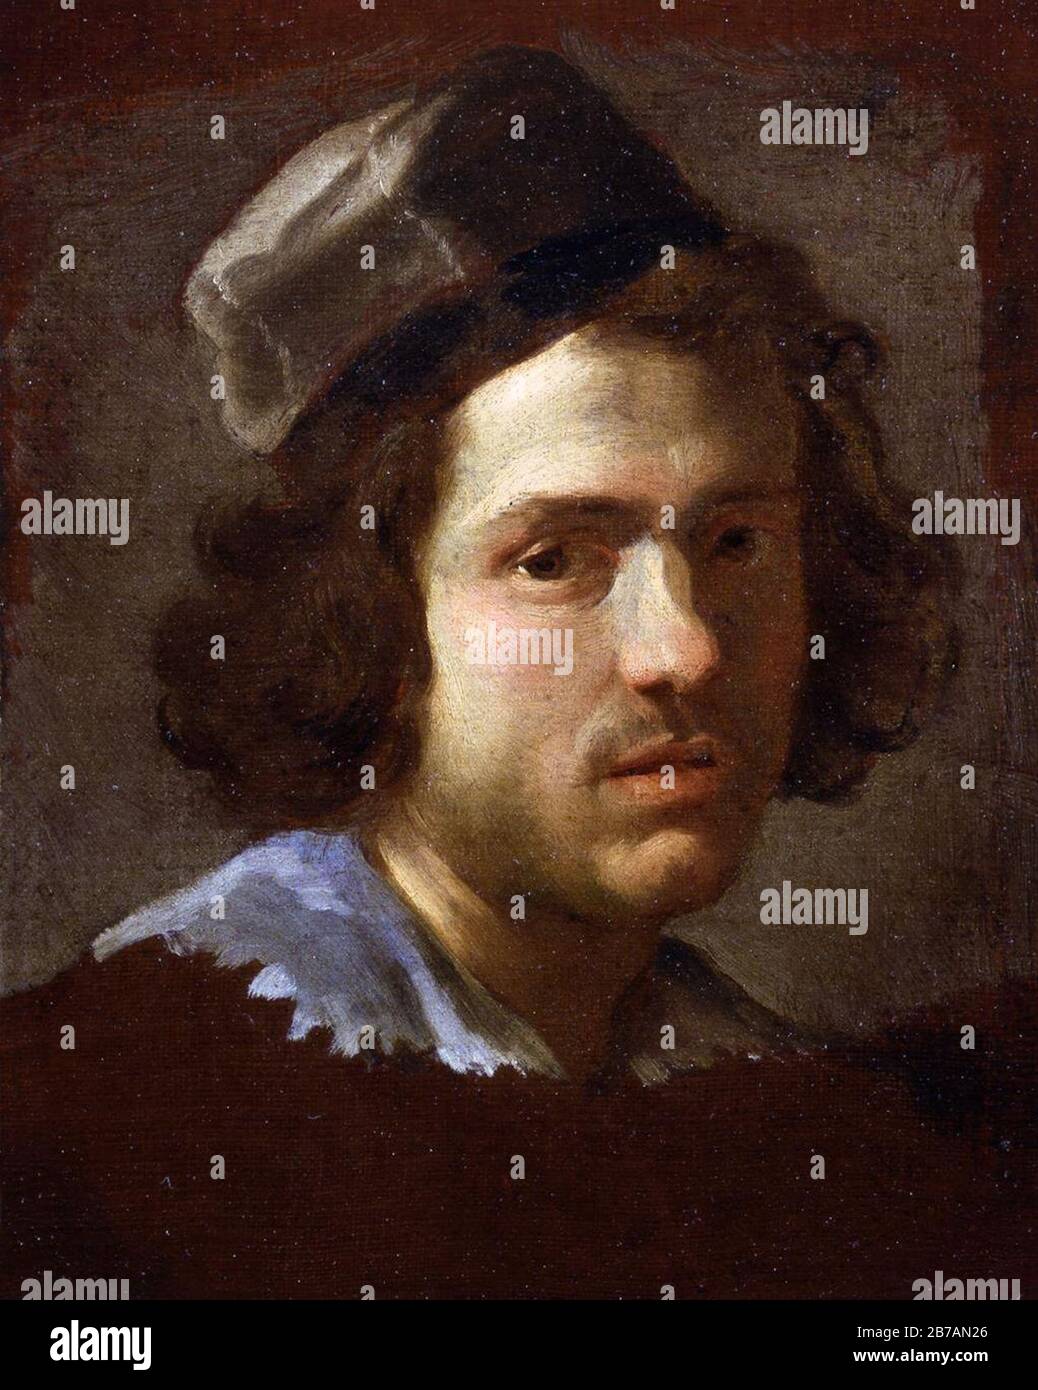 Gian Lorenzo Bernini - Ritratto di Nicolas Poussin Stock Photo - Alamy